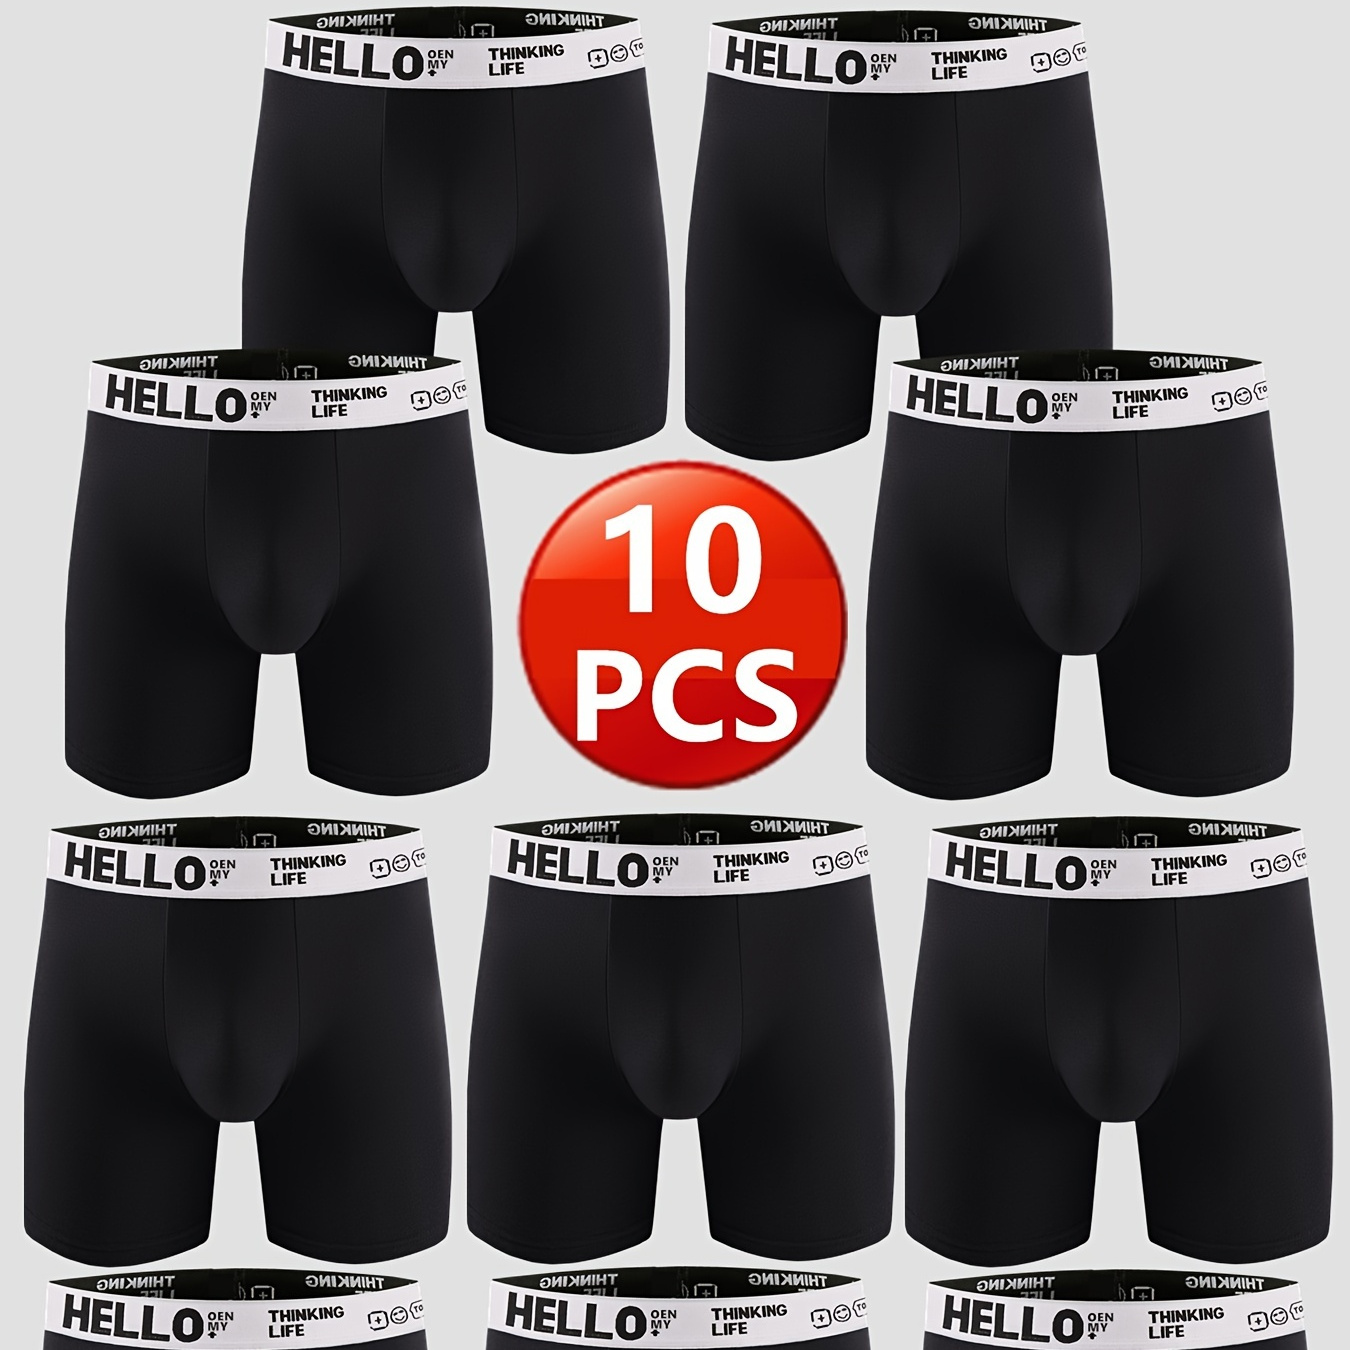 

10pcs Men's Cotton Boxer Briefs, Hello Breathable Comfy Boxer Trunks, Elastic Sports Shorts, Men's Casual & Durable Underwear Perfect For Sports & Home Wear